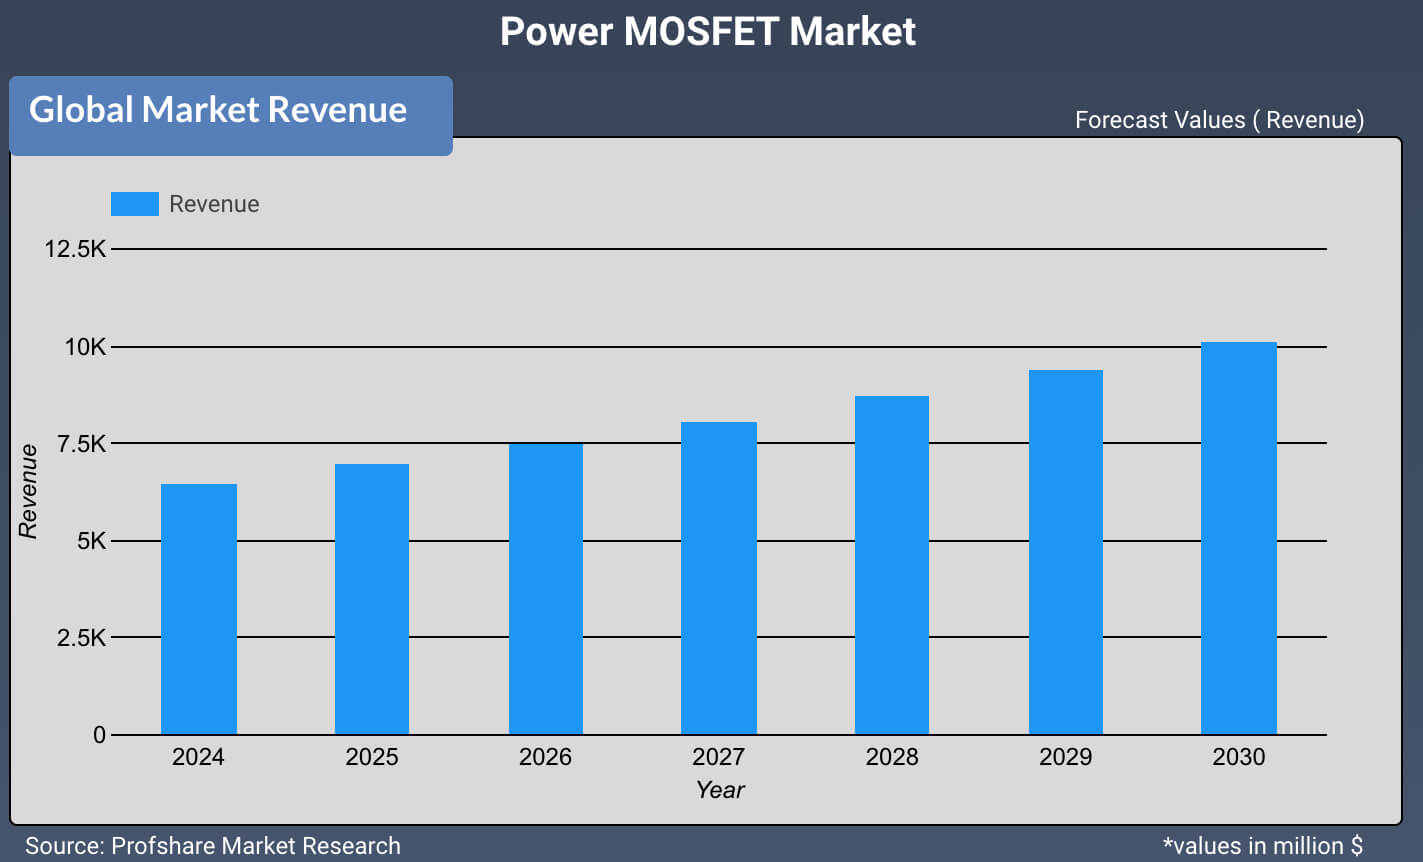 Power MOSFET Market